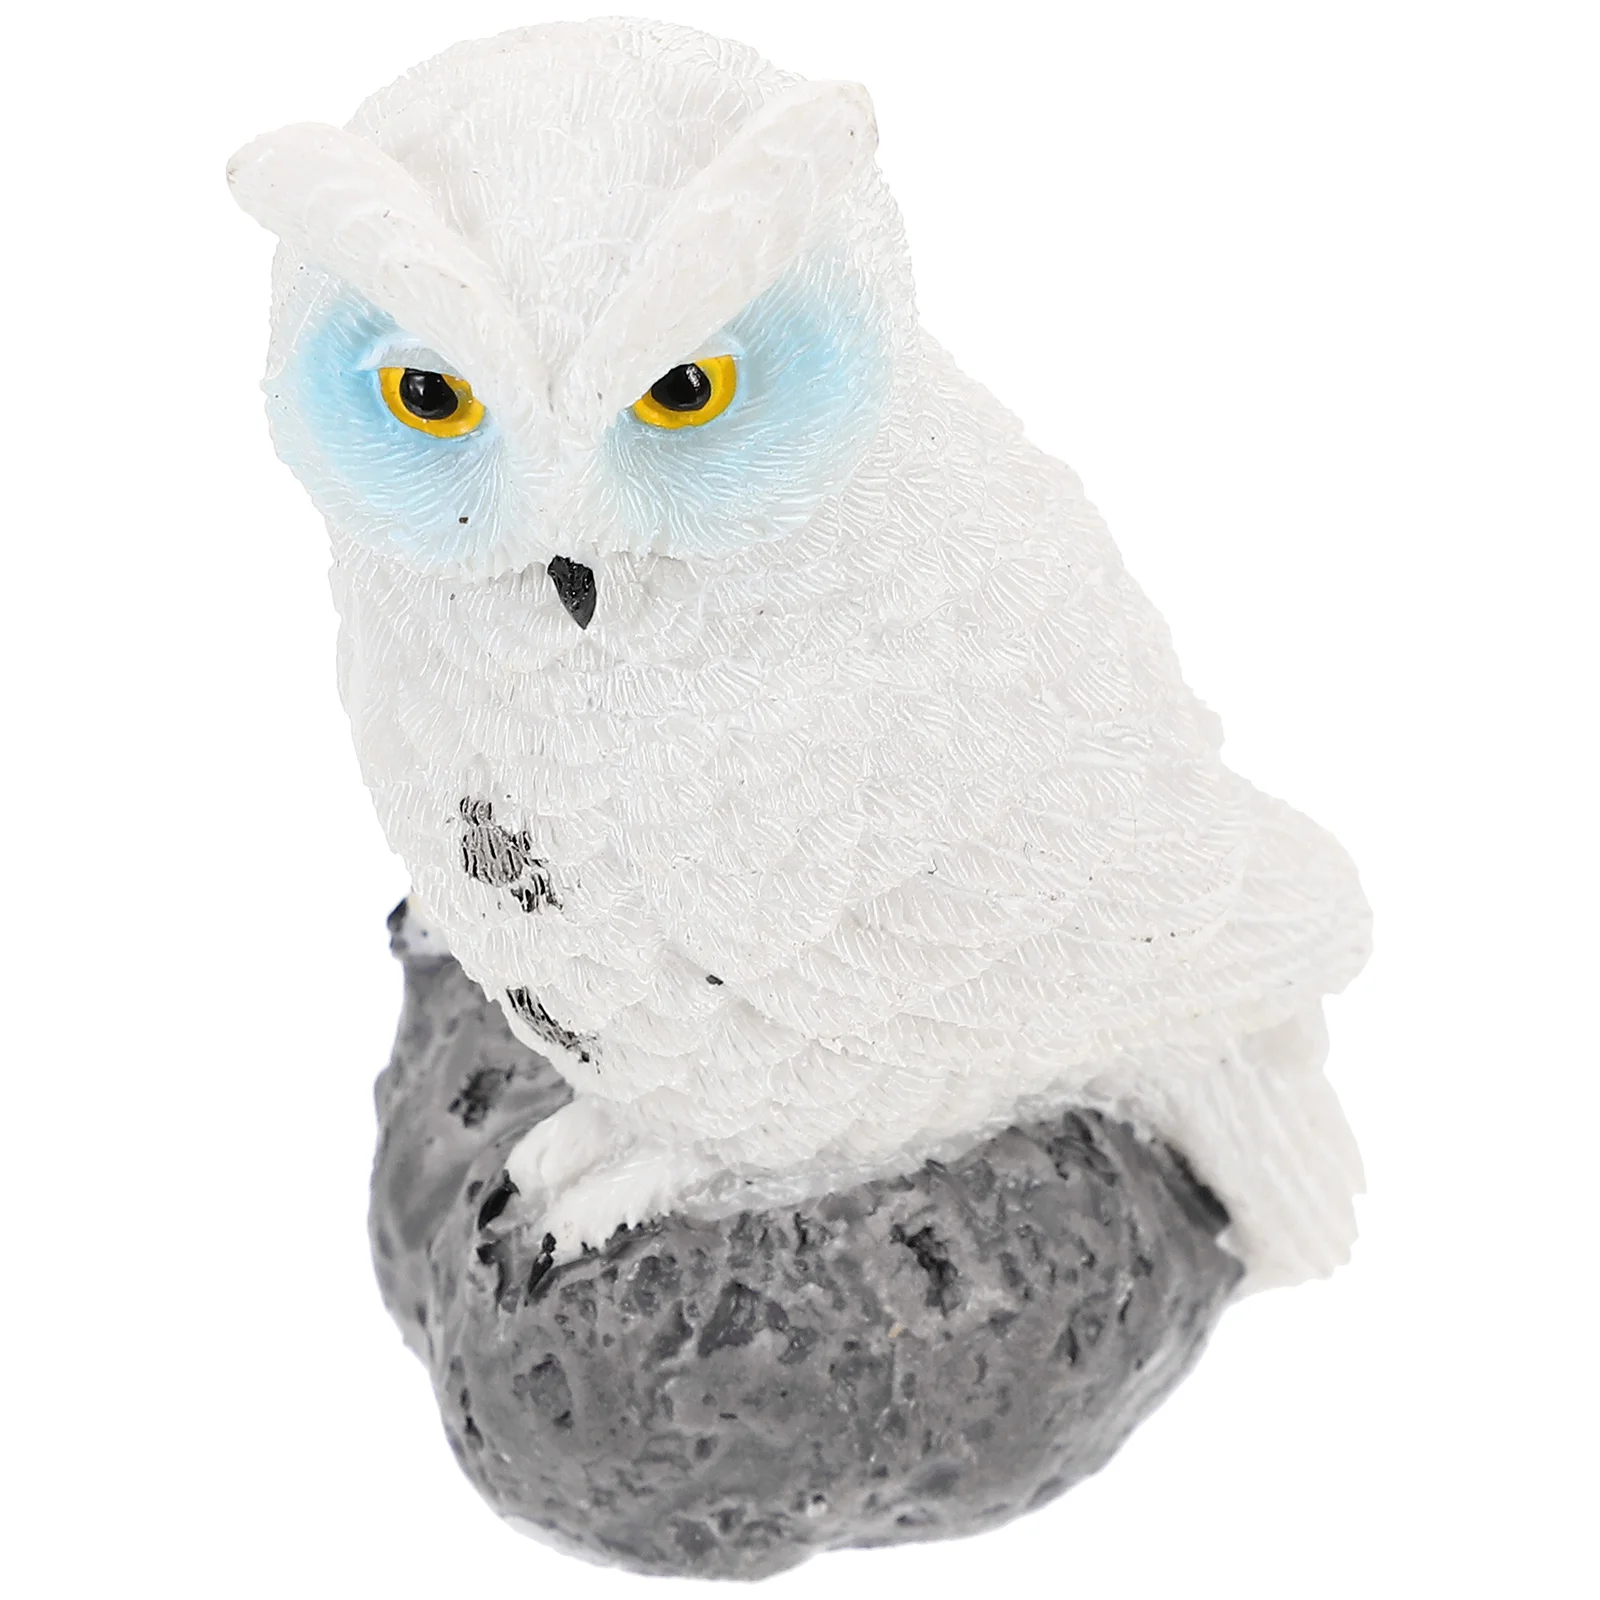 

Practical Creative Multi-use Premium Realistic Fake Birds Models Garden Scene Decoration Owl Ornaments for Decorating